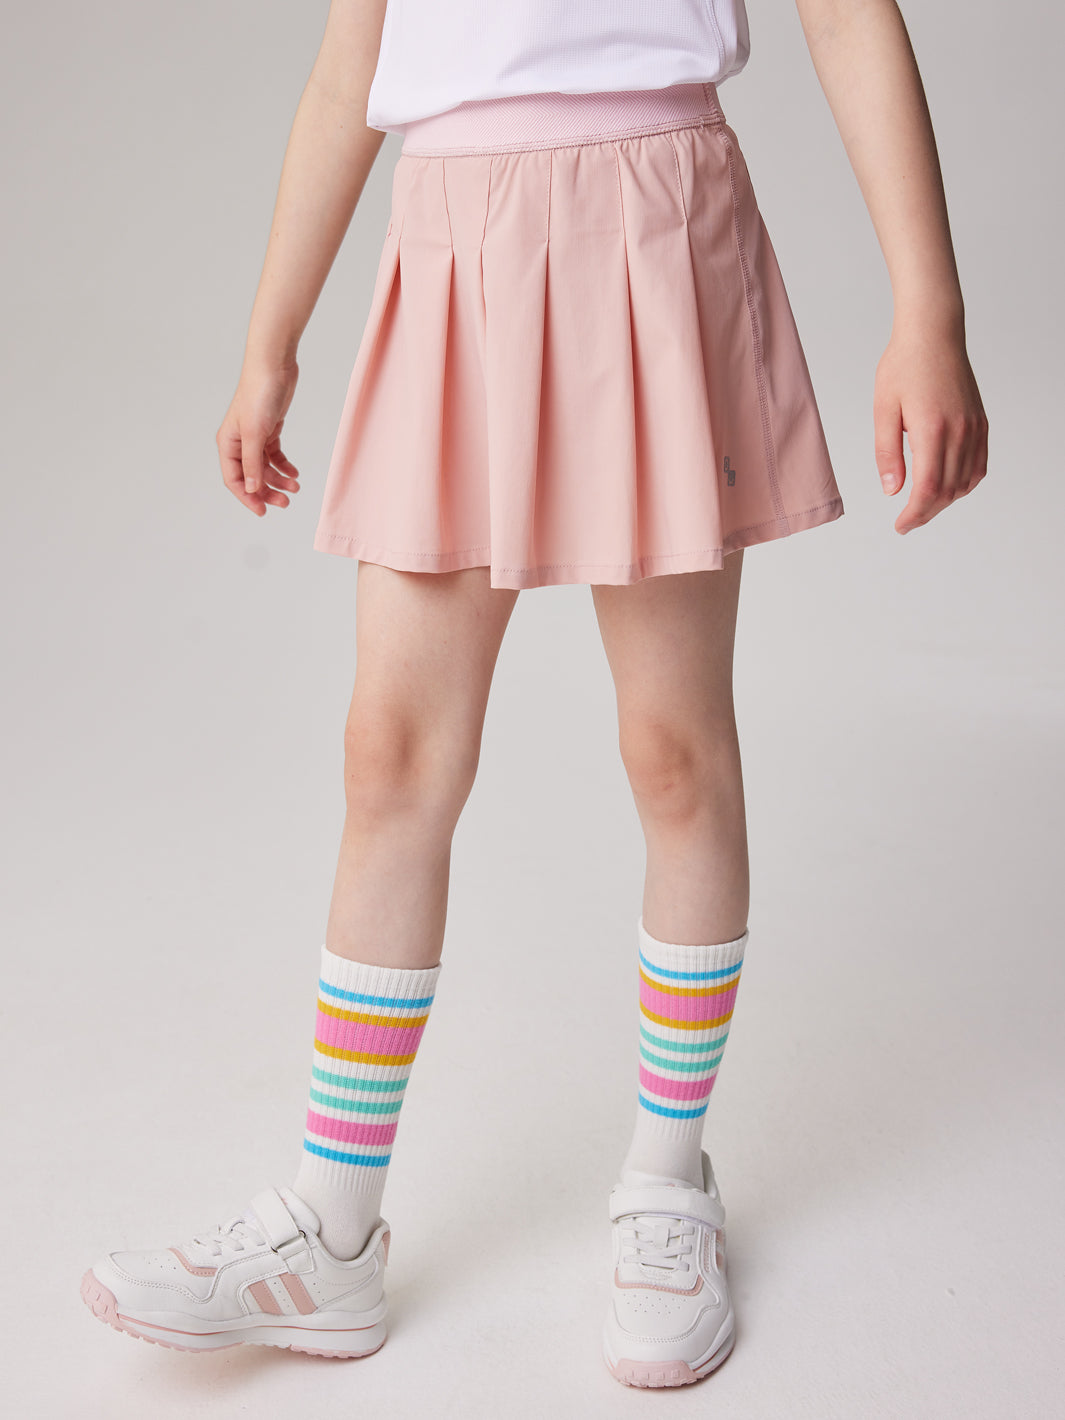 Stylish Pleated Skirt